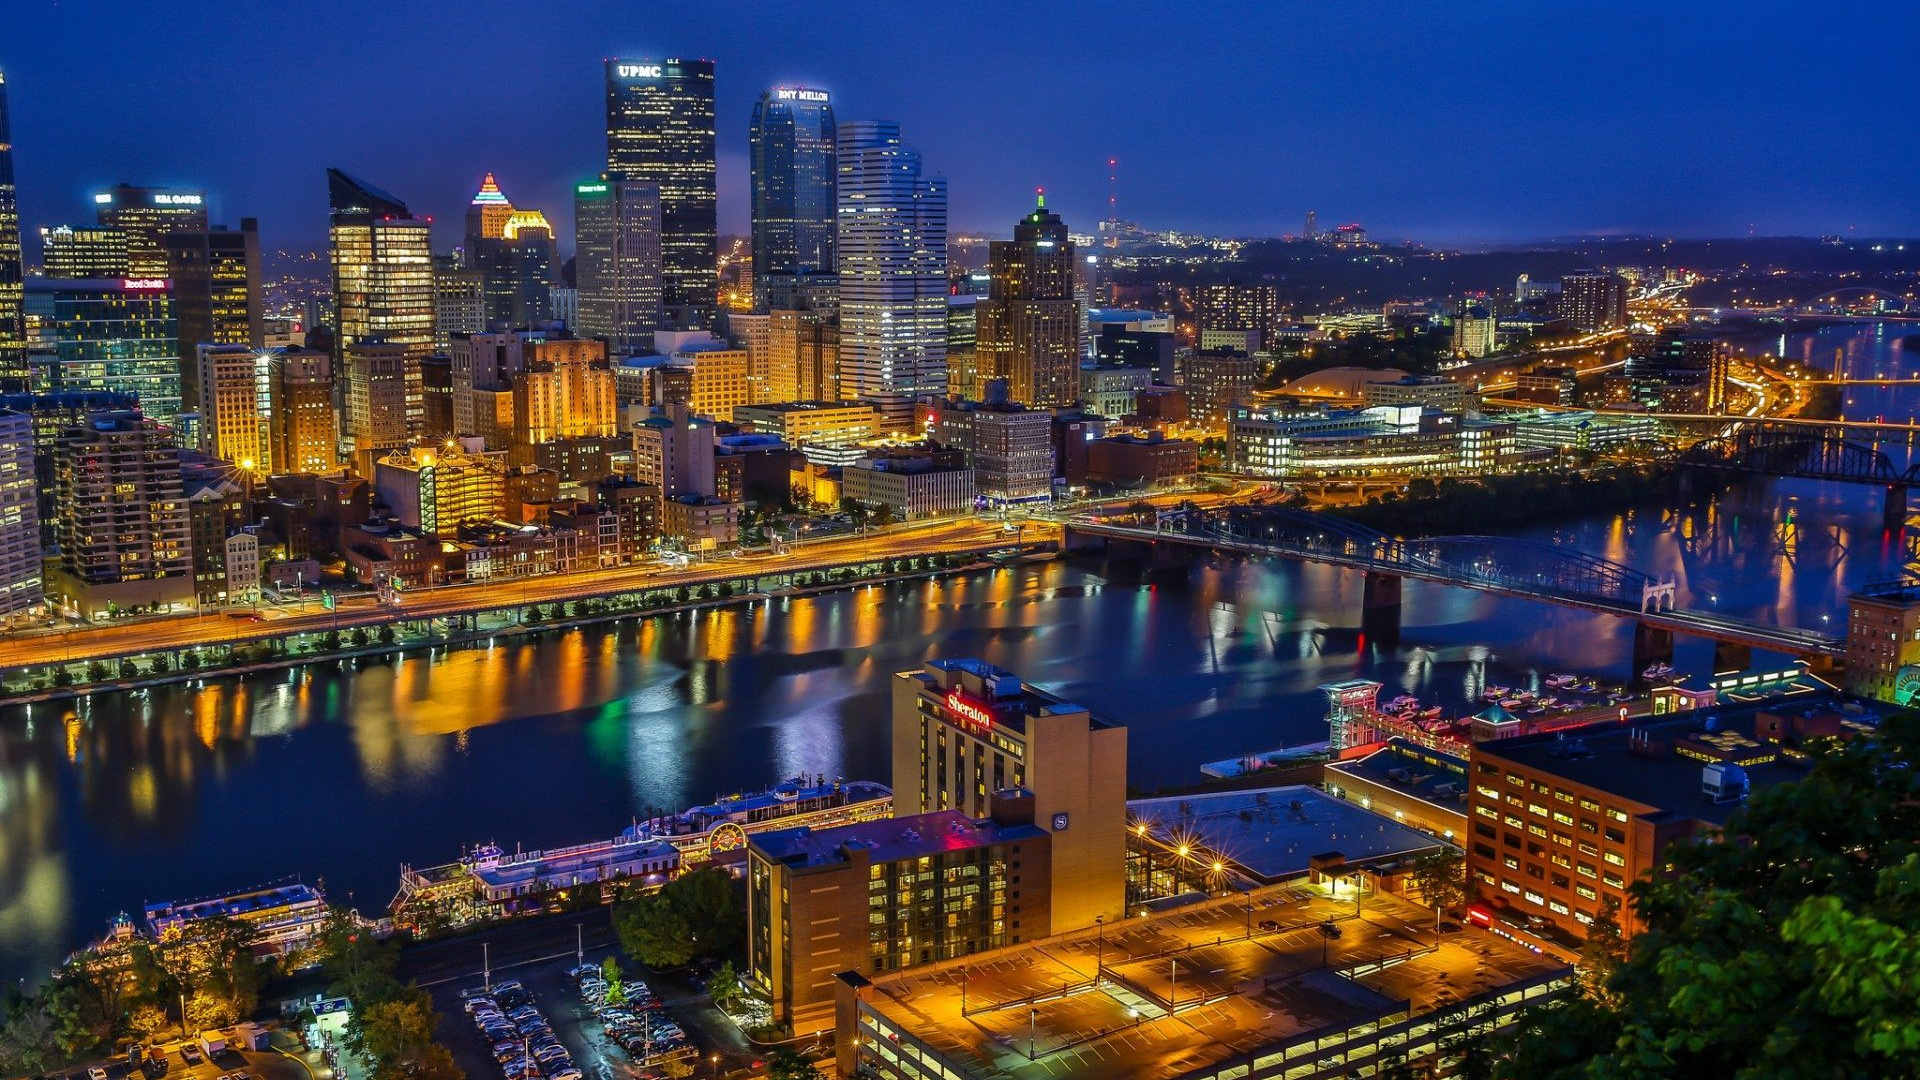 Aerial view of Pittsburgh, Transparent wallpaper, UPMC health system, City skyline, 1920x1080 Full HD Desktop